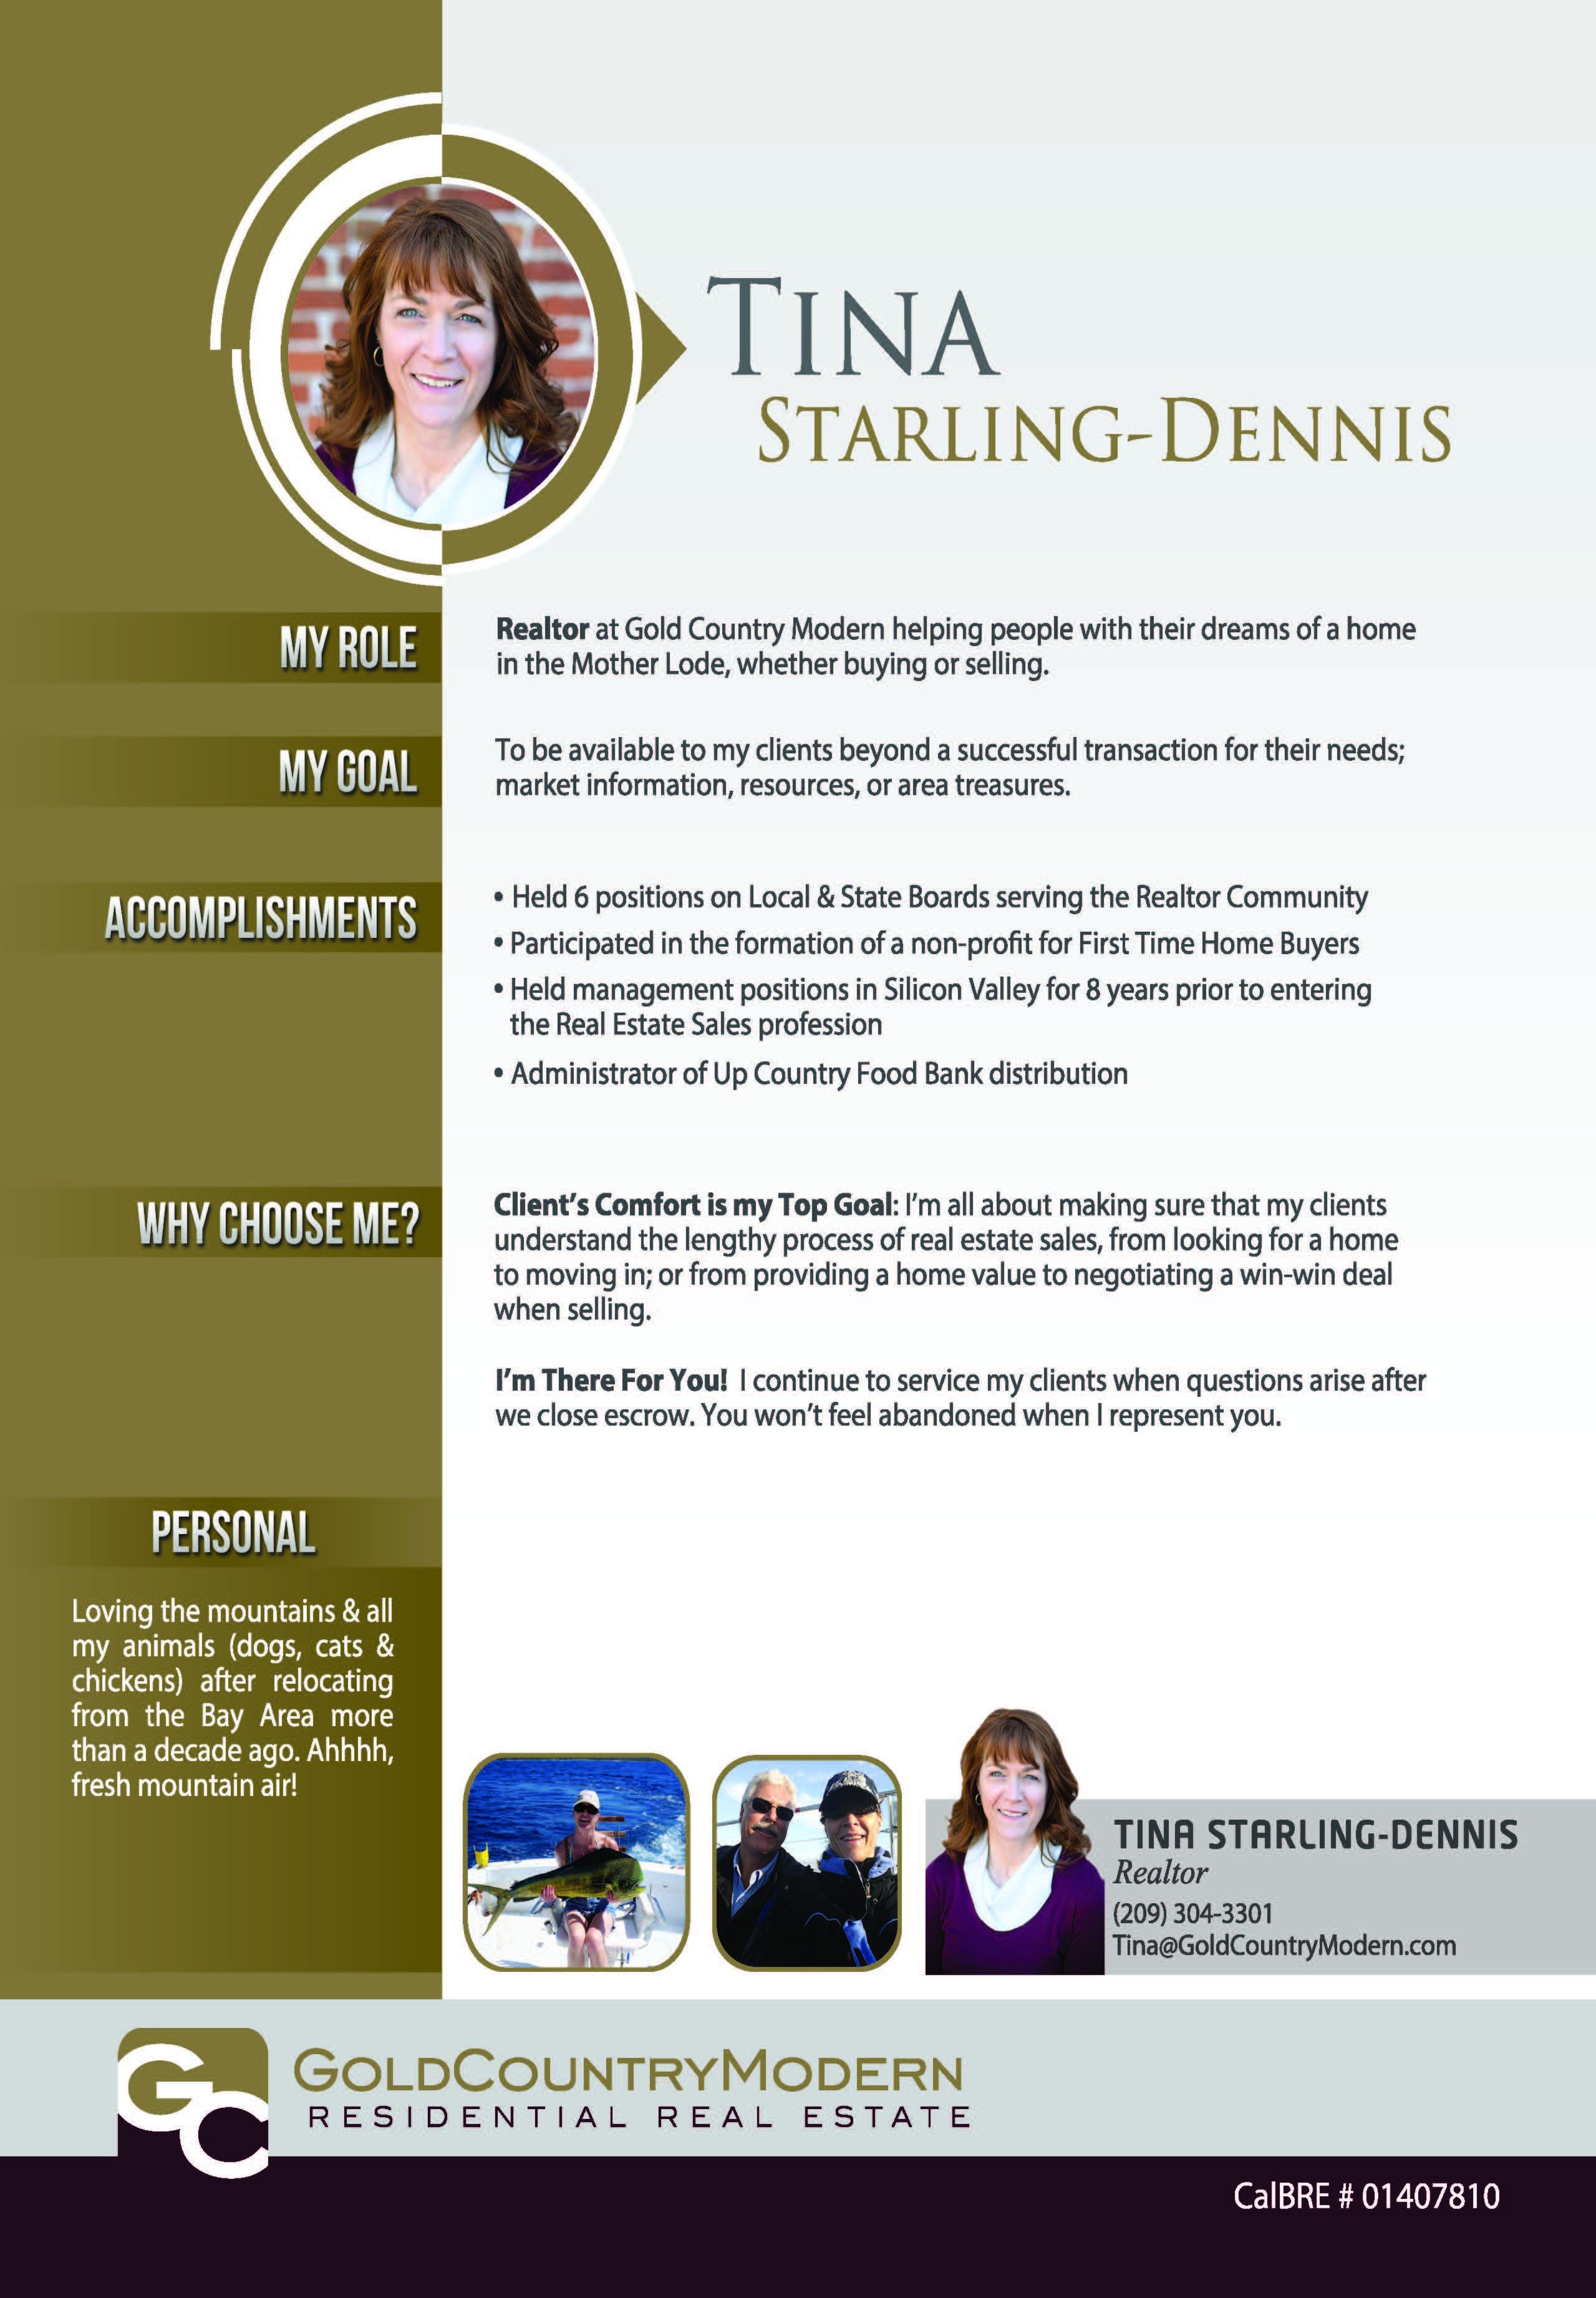 Tina Starling-Dennis Realtor - Gold Country Modern